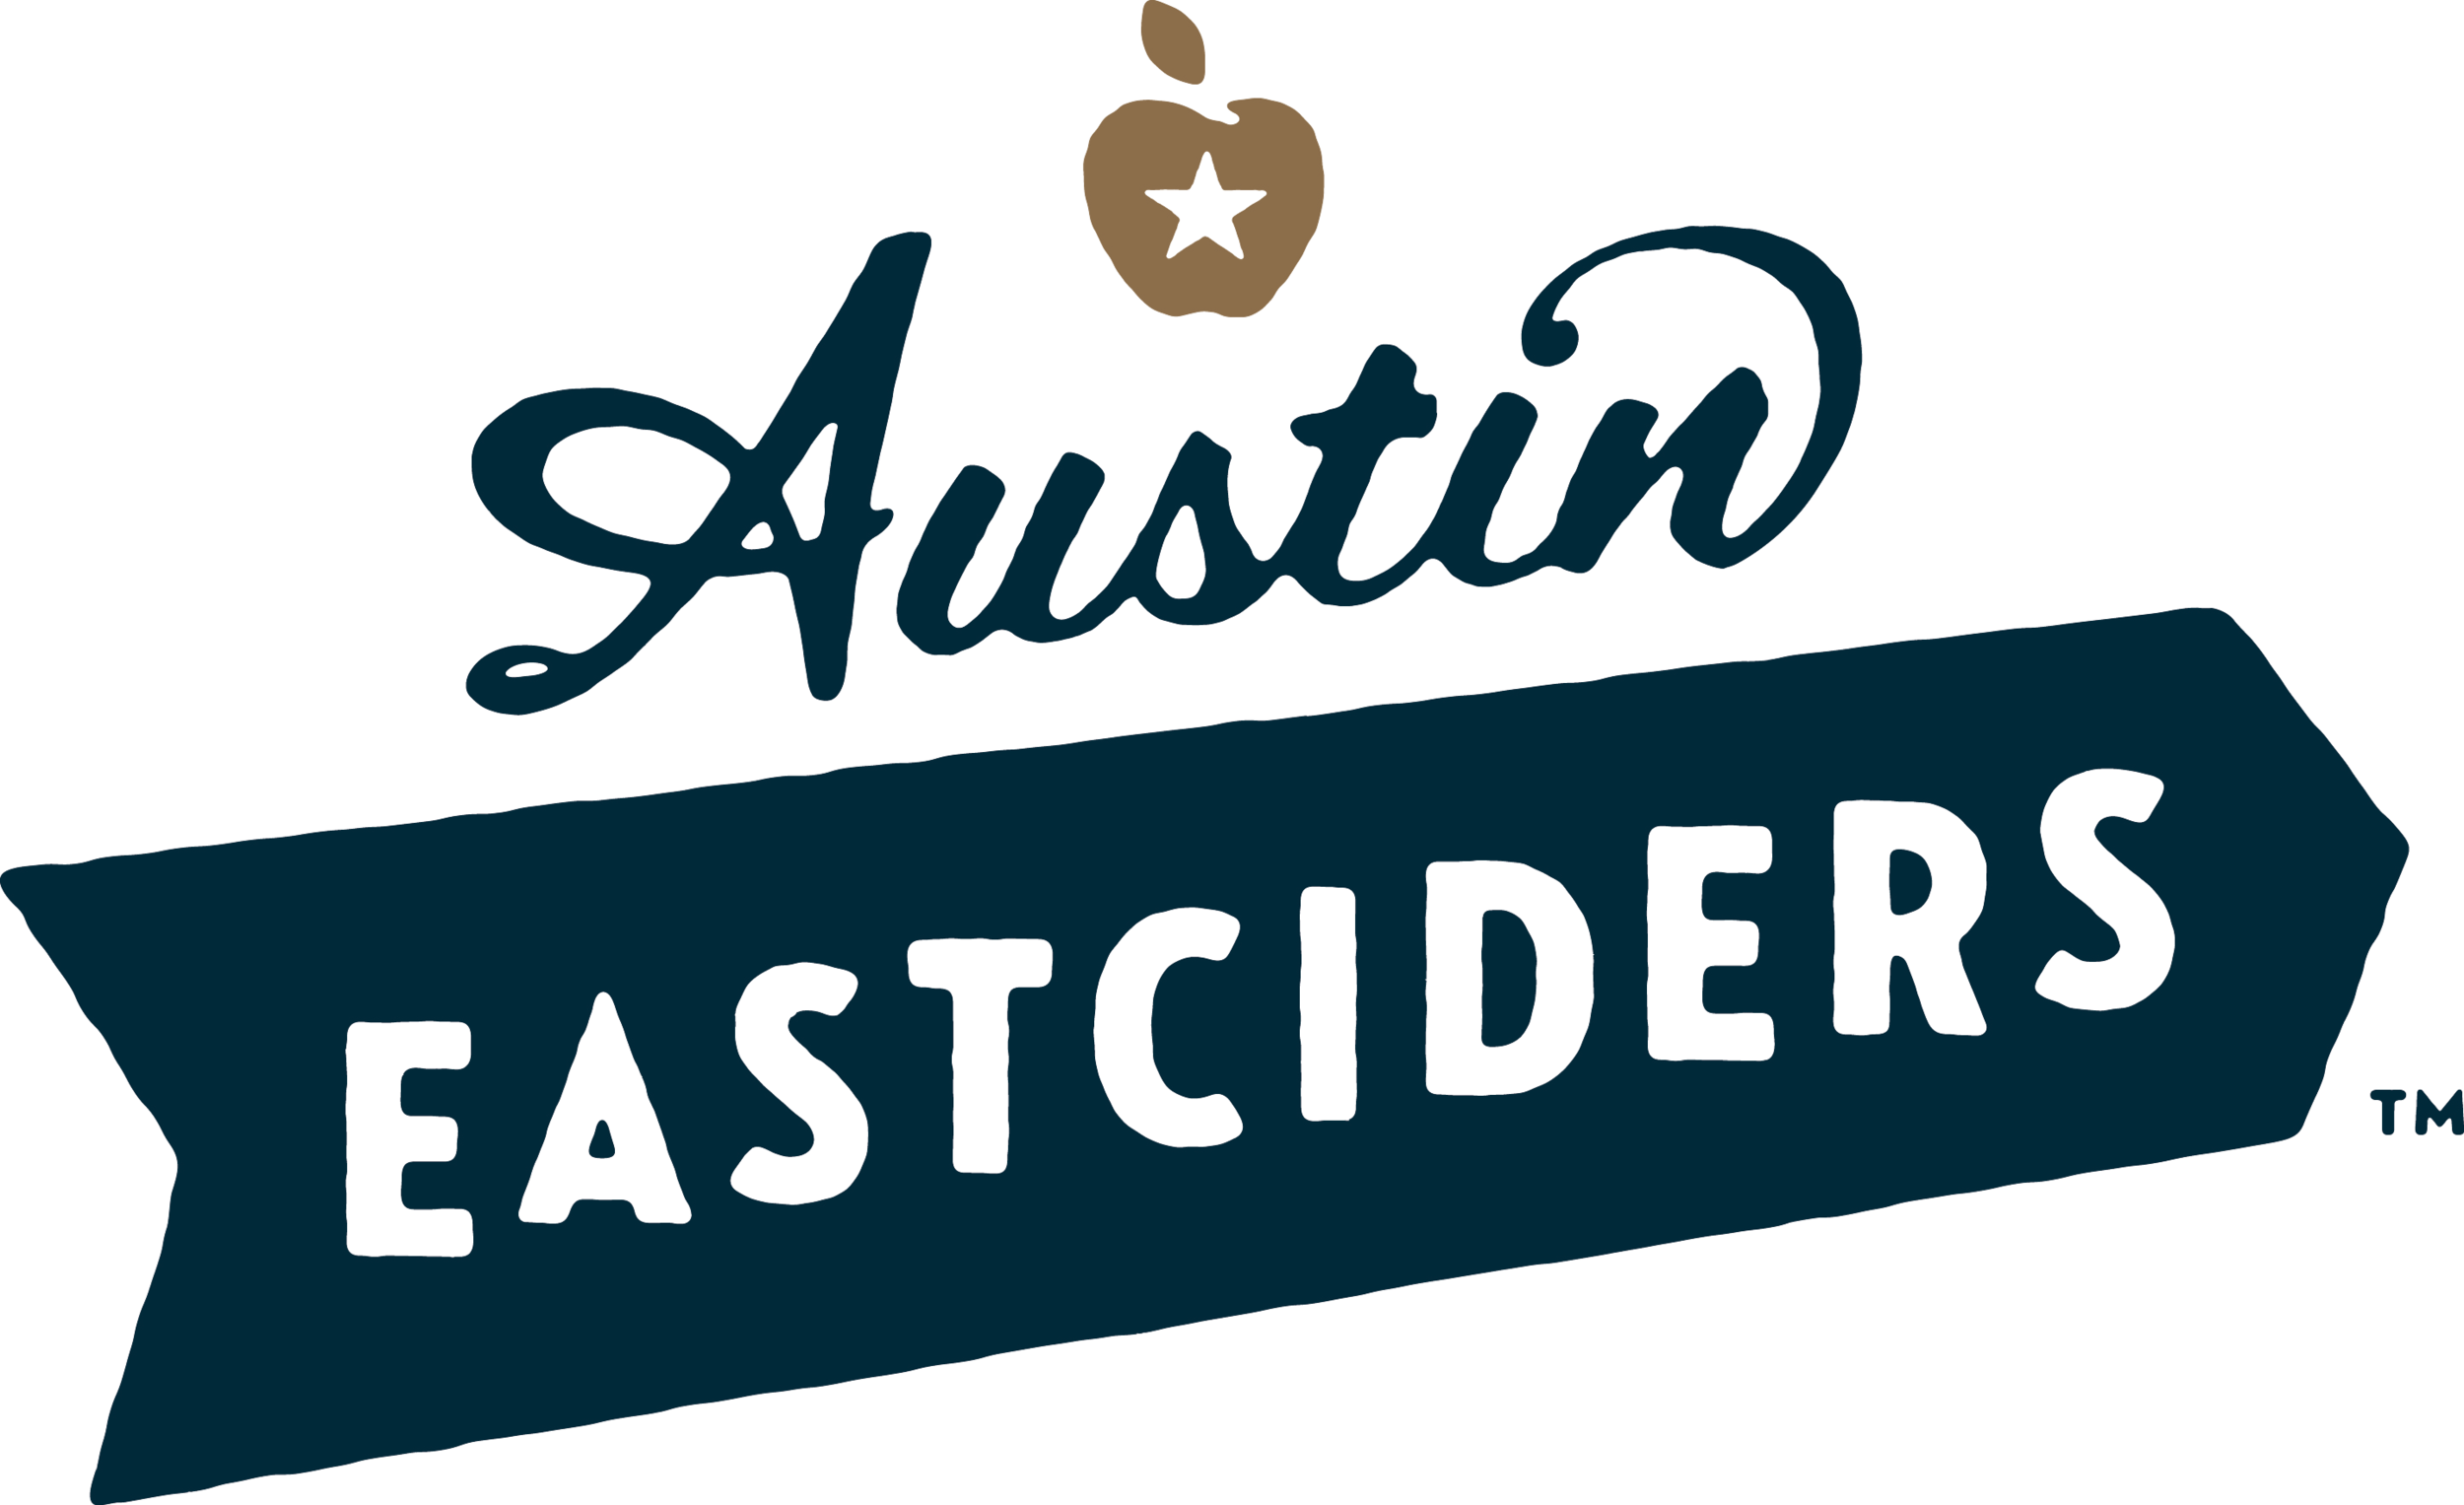 Austin-Eastciders.png